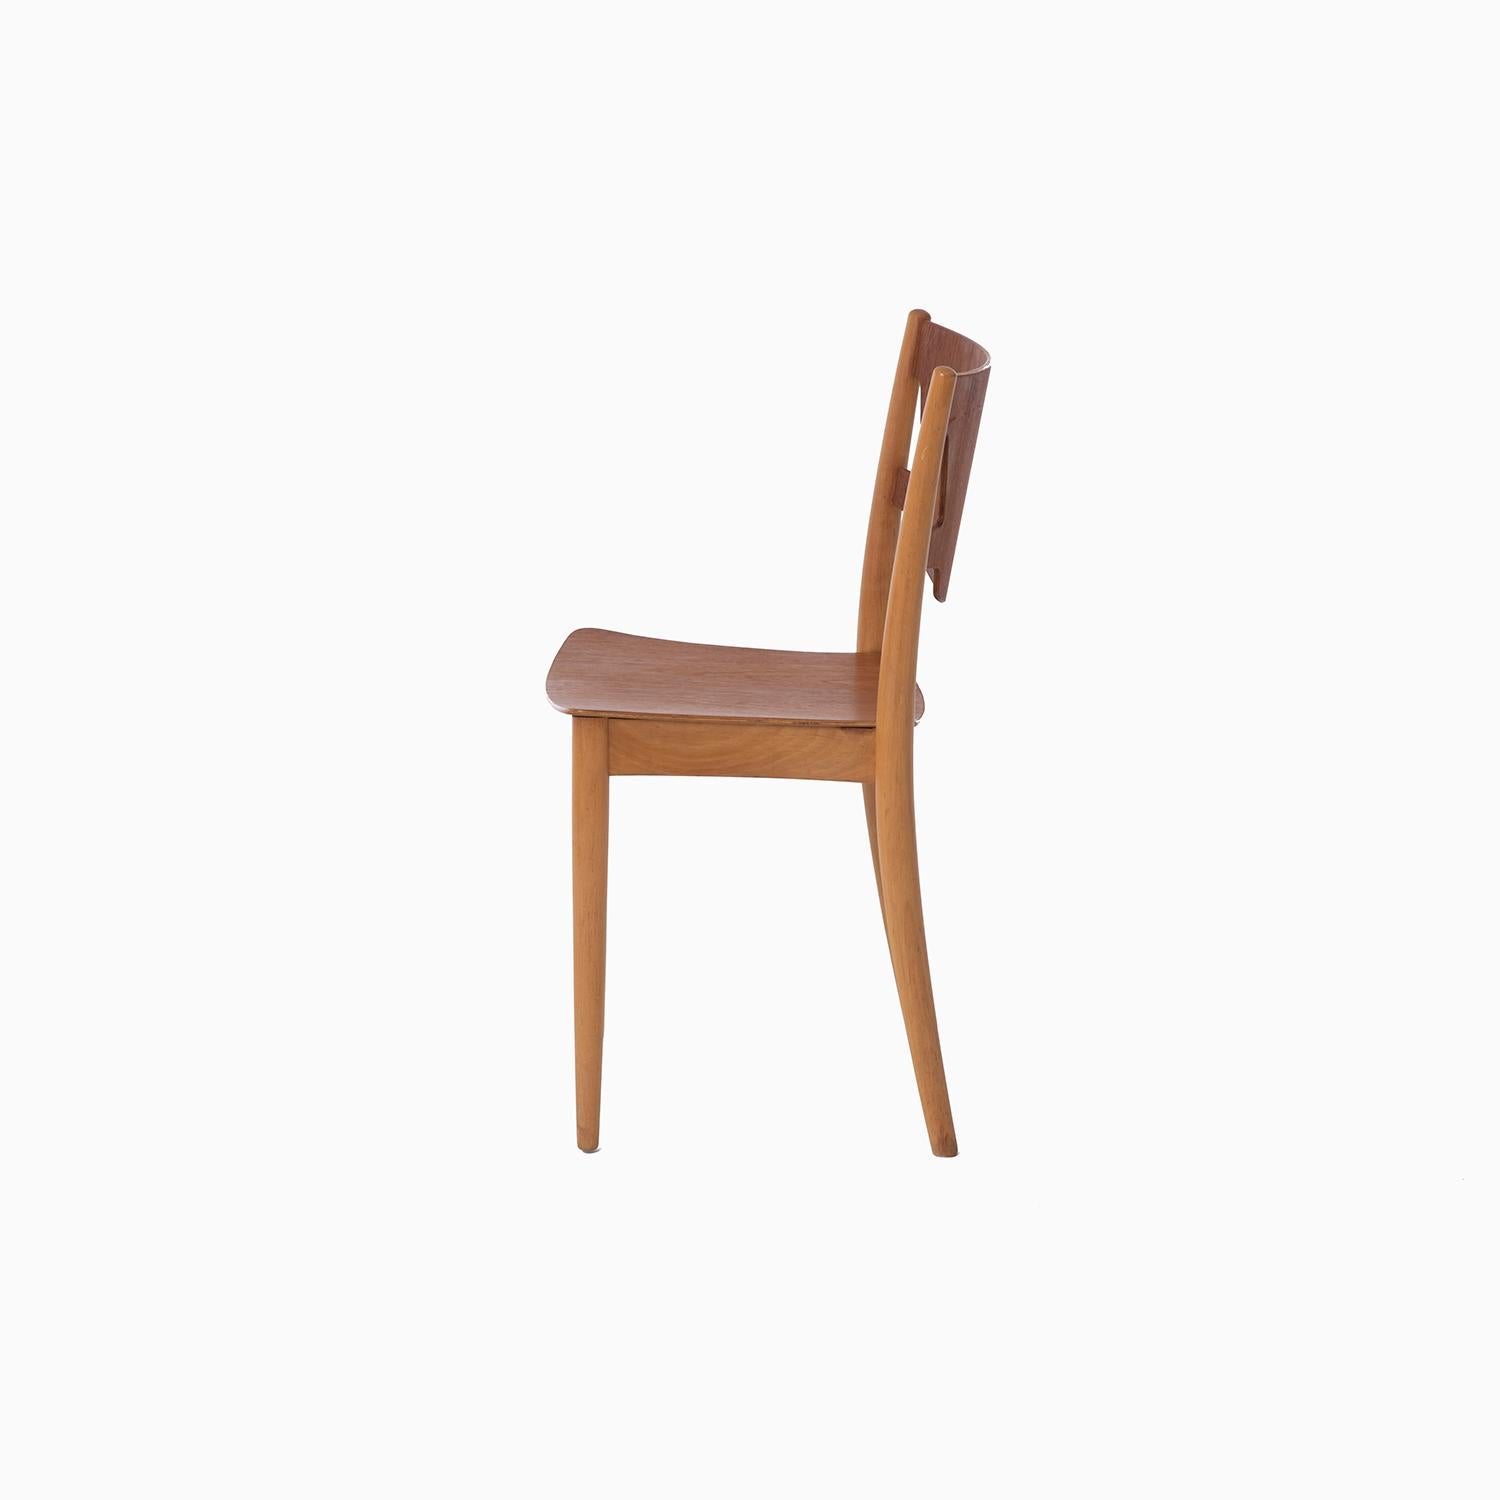 20th Century Danish Modern Hvidt & Molgaard Stacking Side Chair